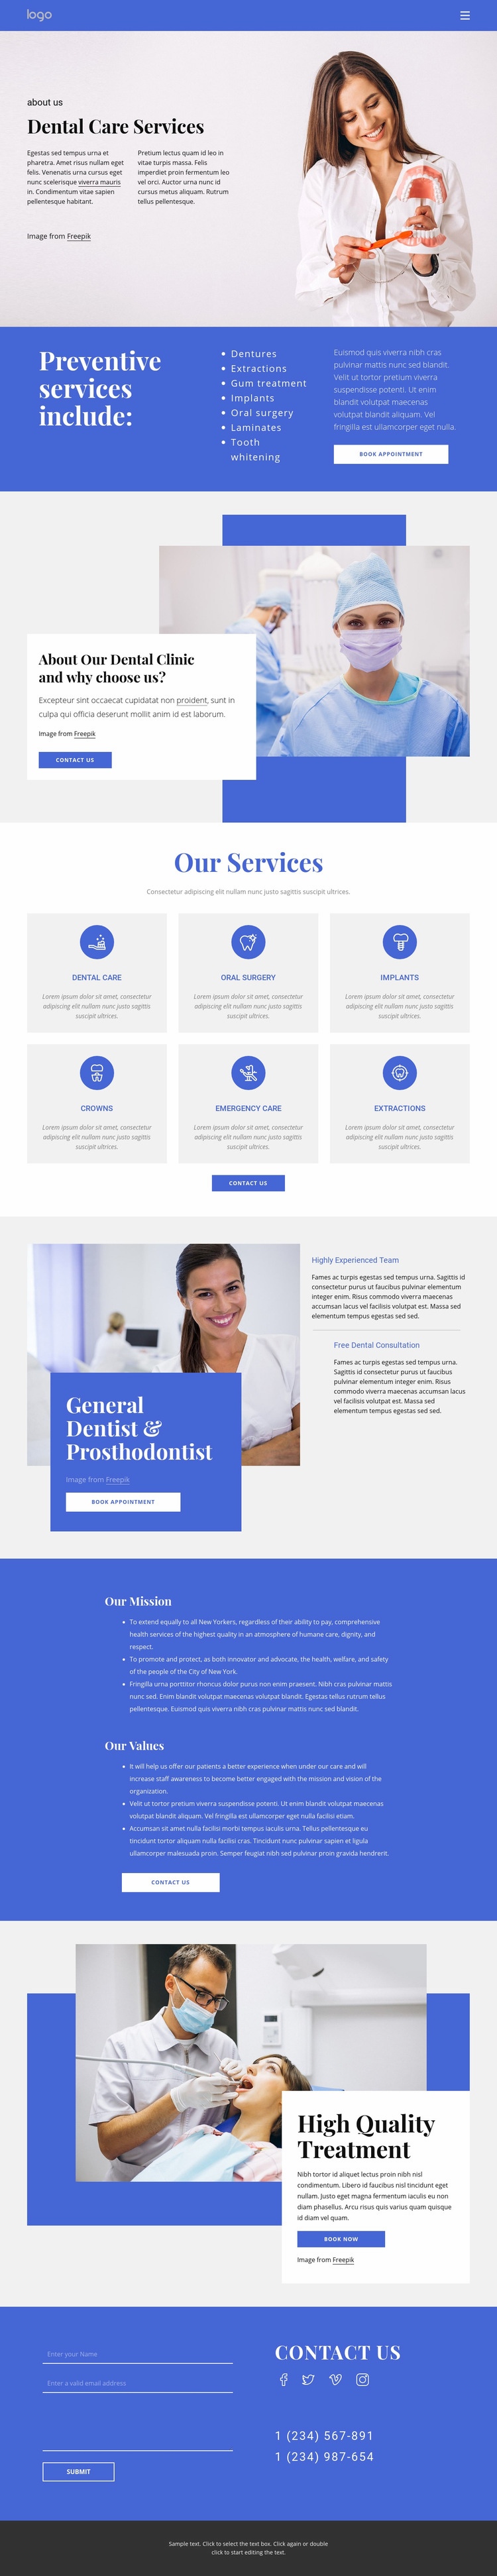 Dentist and prosthodontics Web Page Design